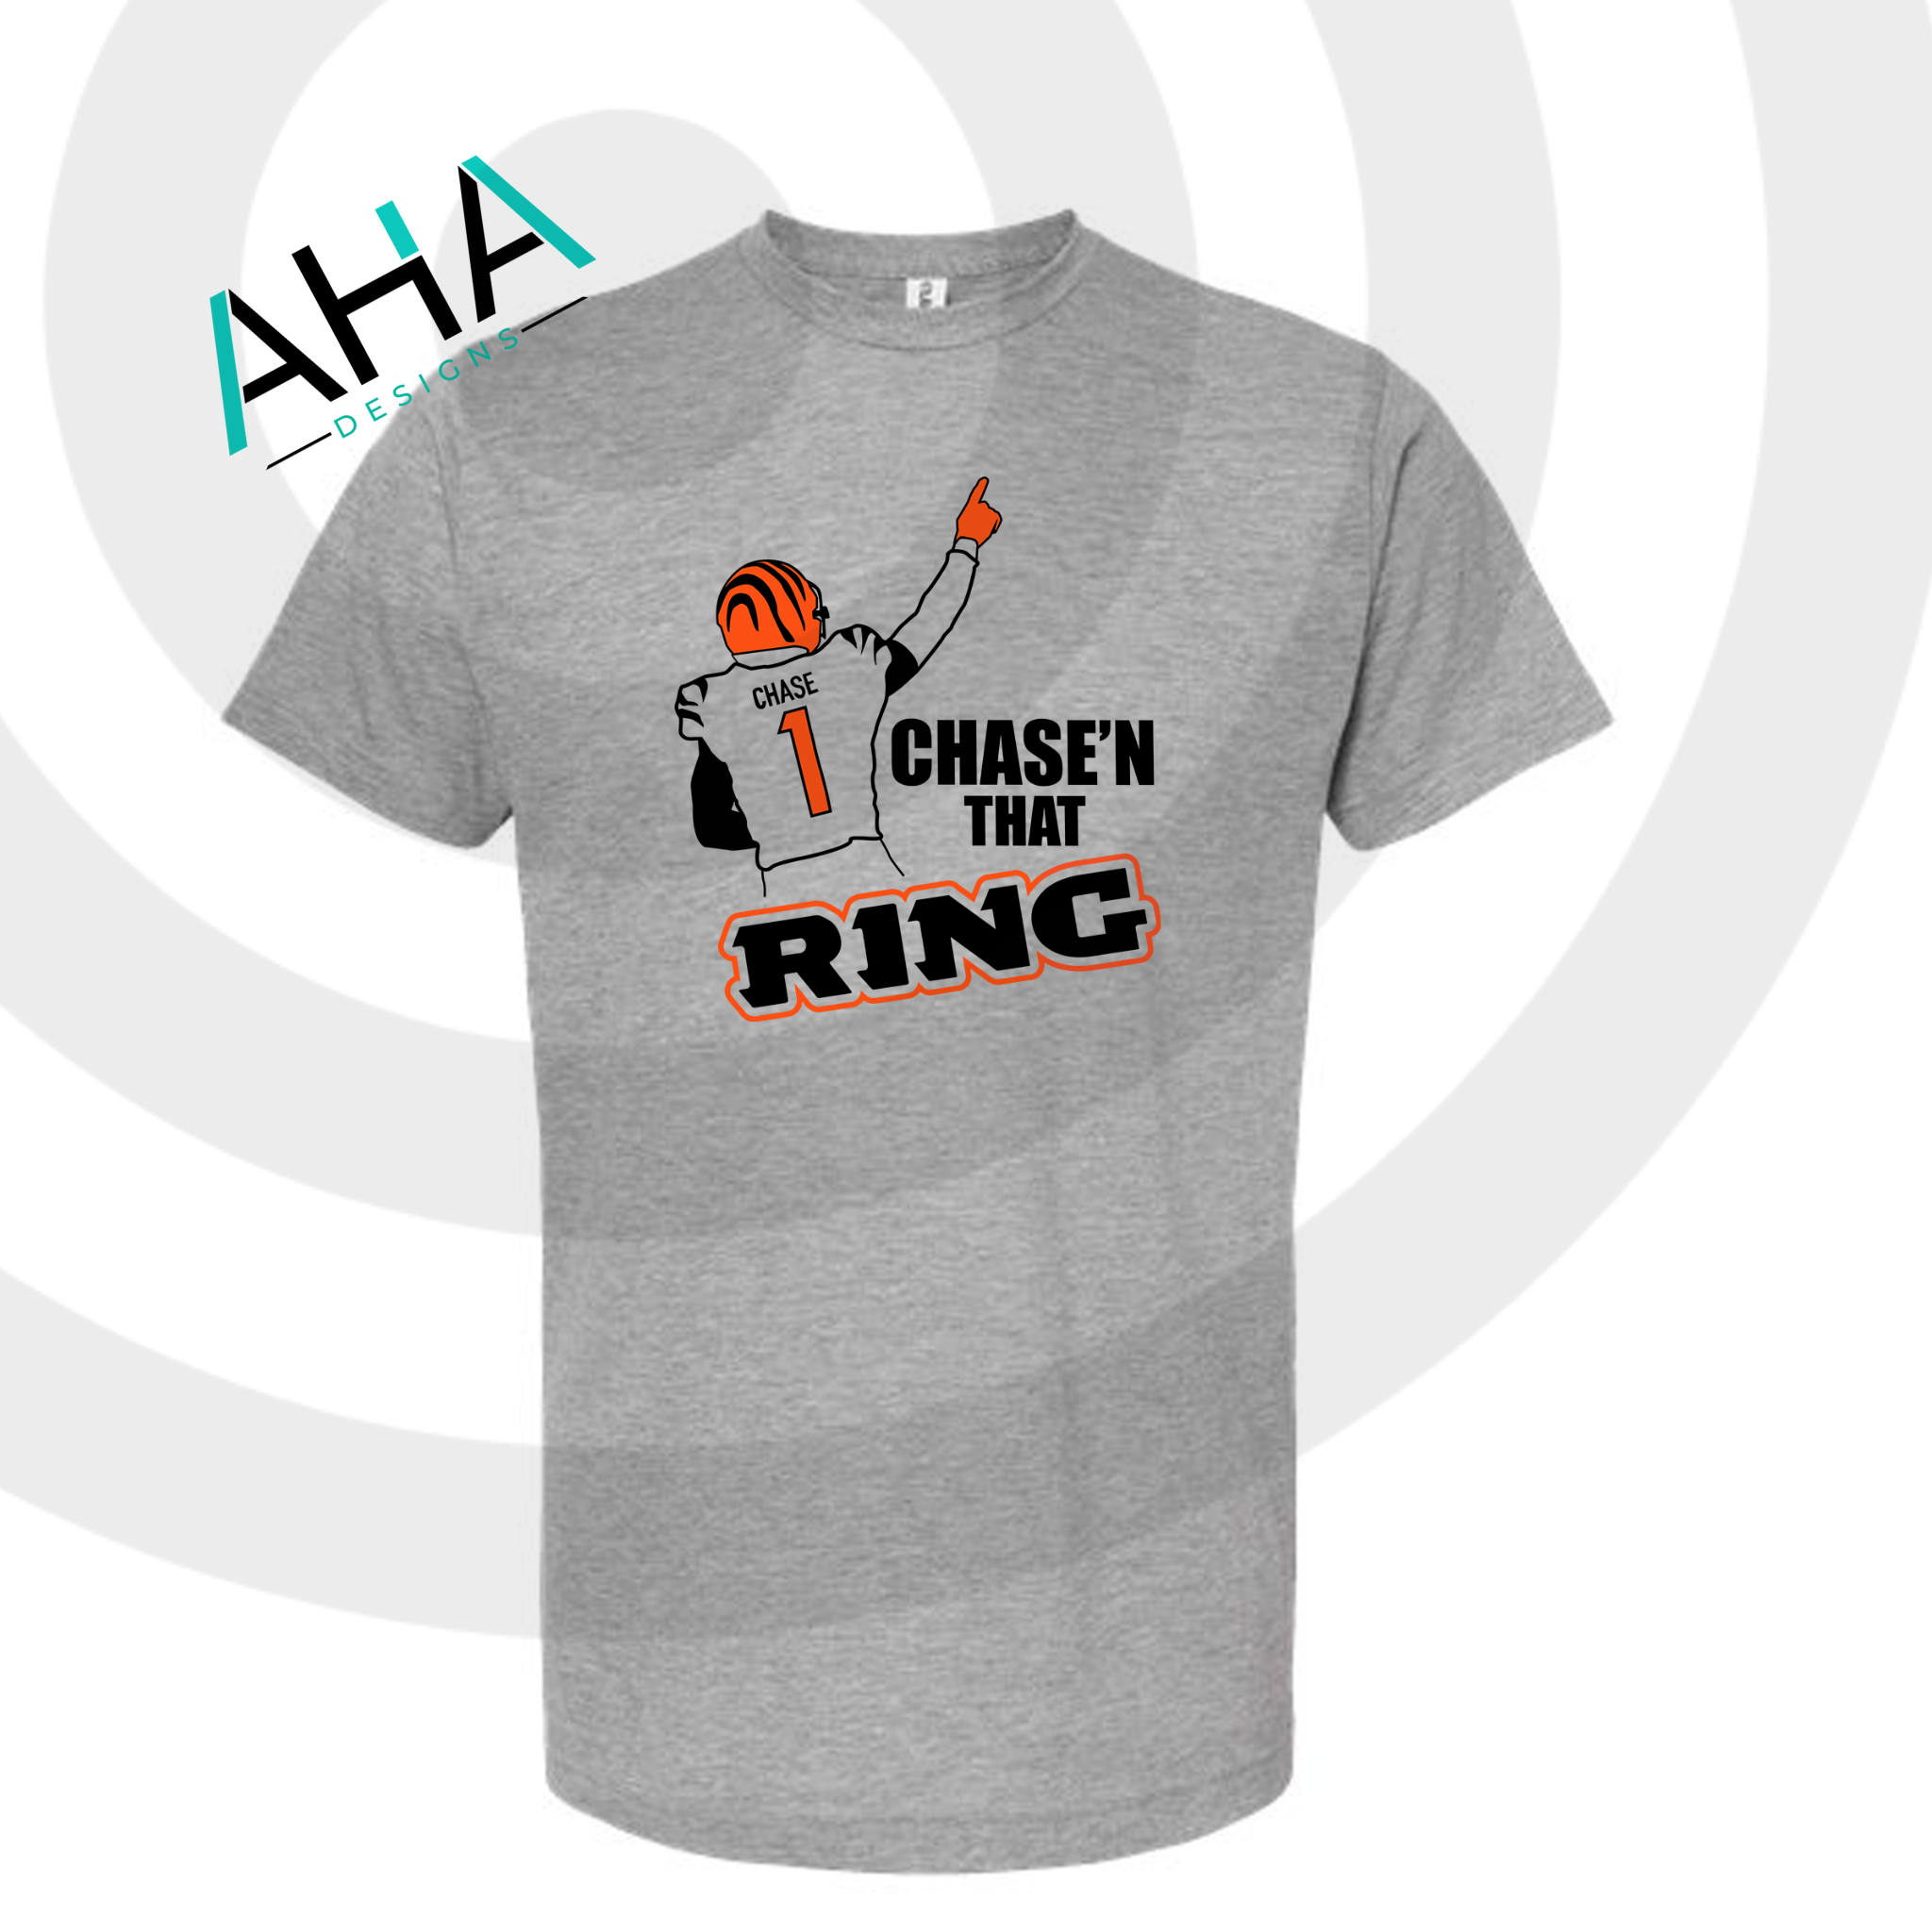 Chase'n That Ring T-shirt